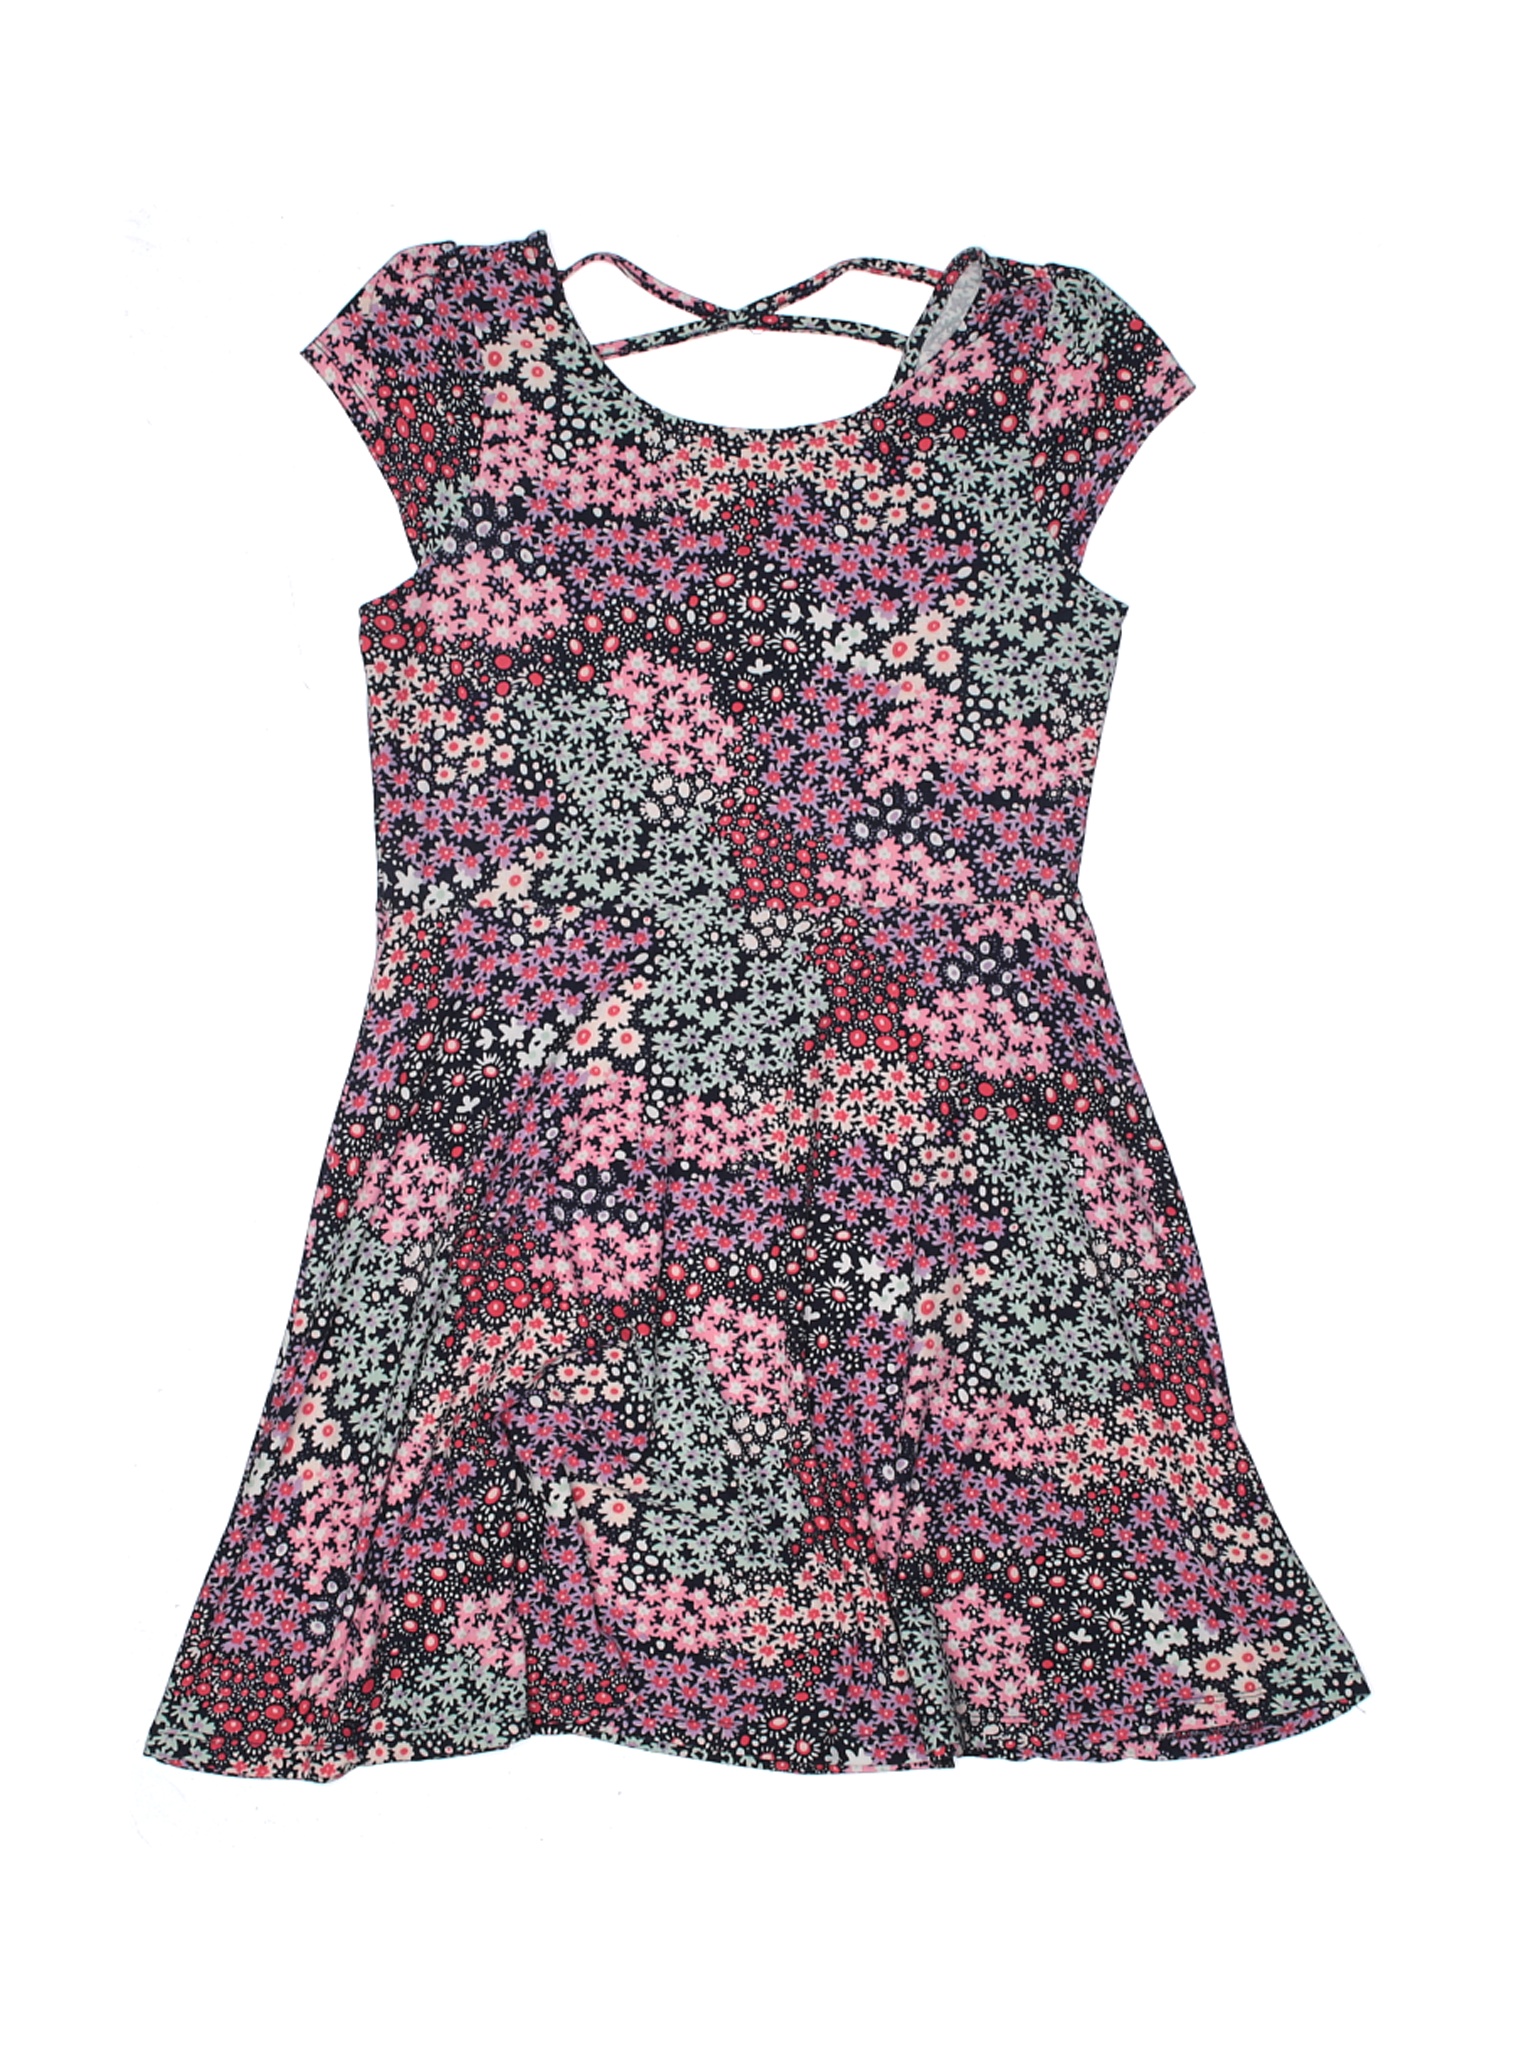 Epic Threads Girls Pink Dress XL Youth | eBay